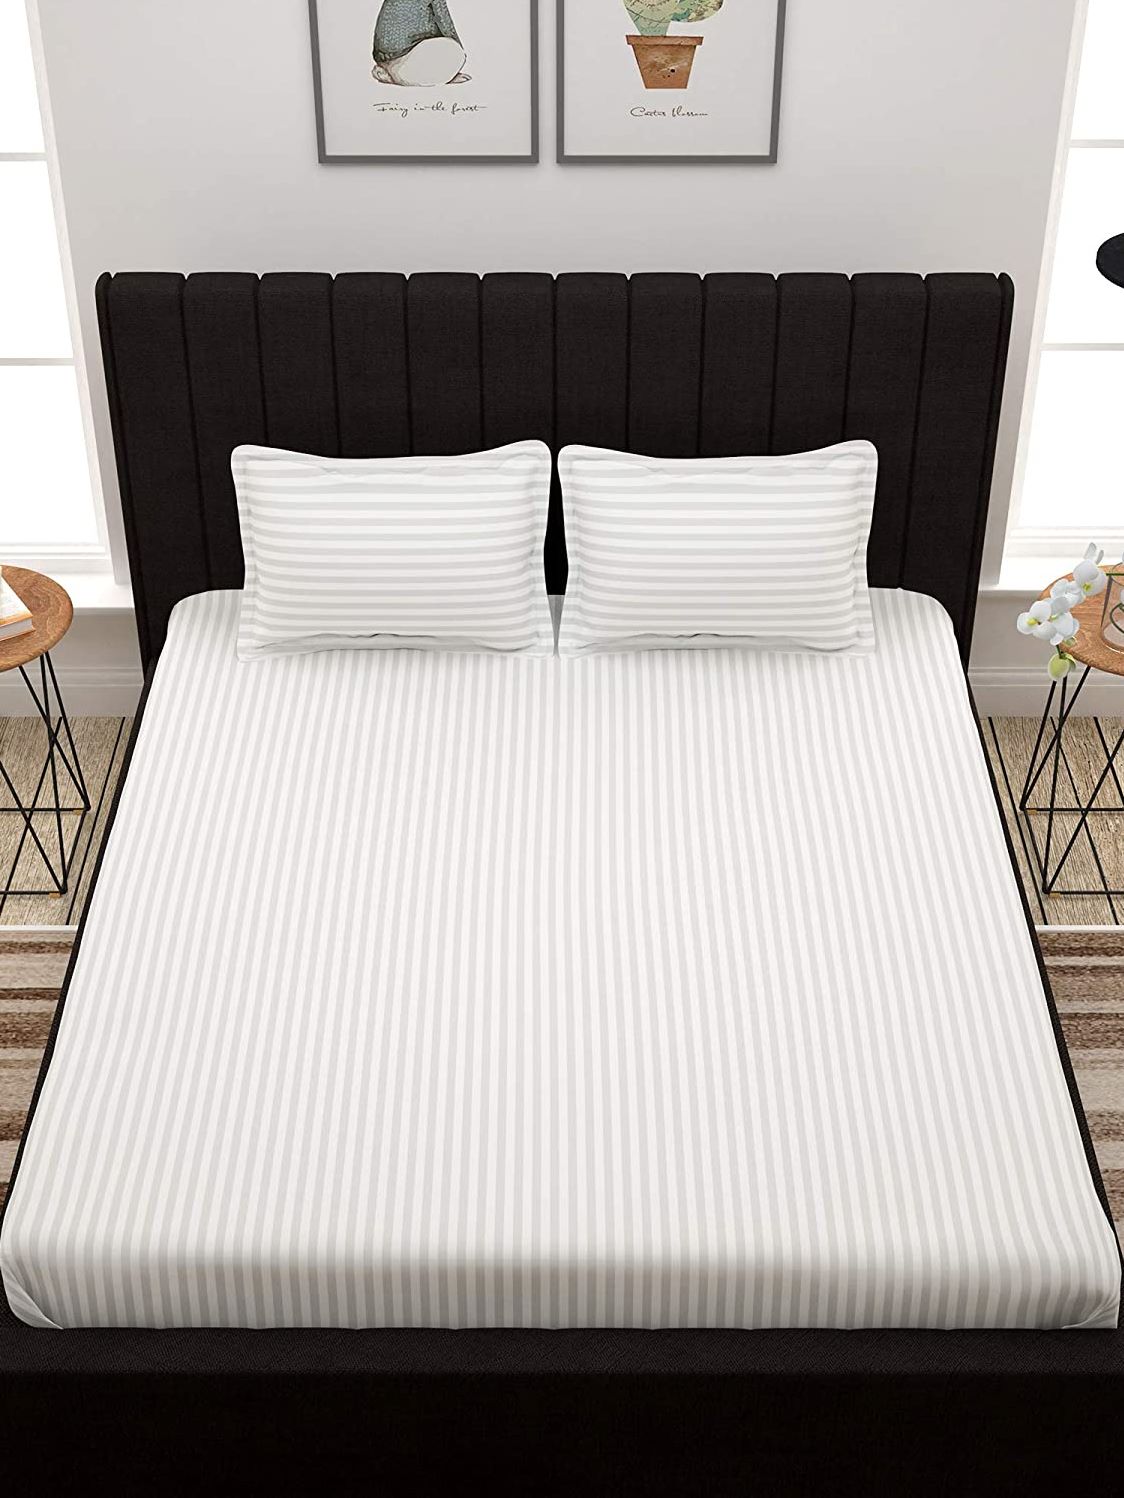 EVER HOME Cotton Satin Striped Plain Bedsheet for Super King Size Bed